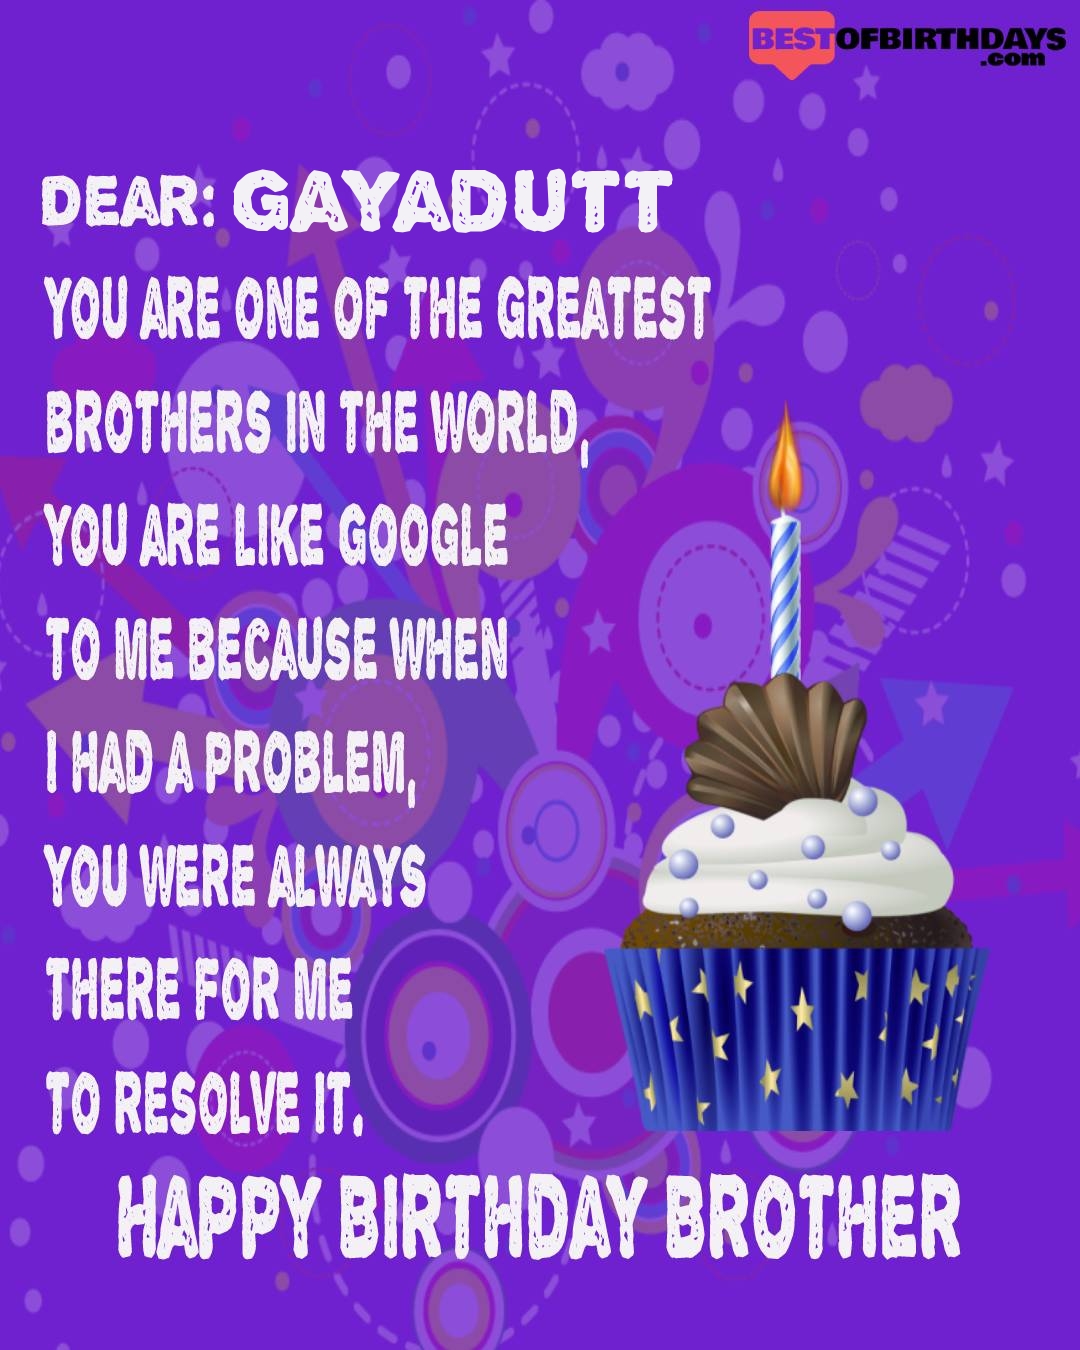 Happy birthday gayadutt bhai brother bro